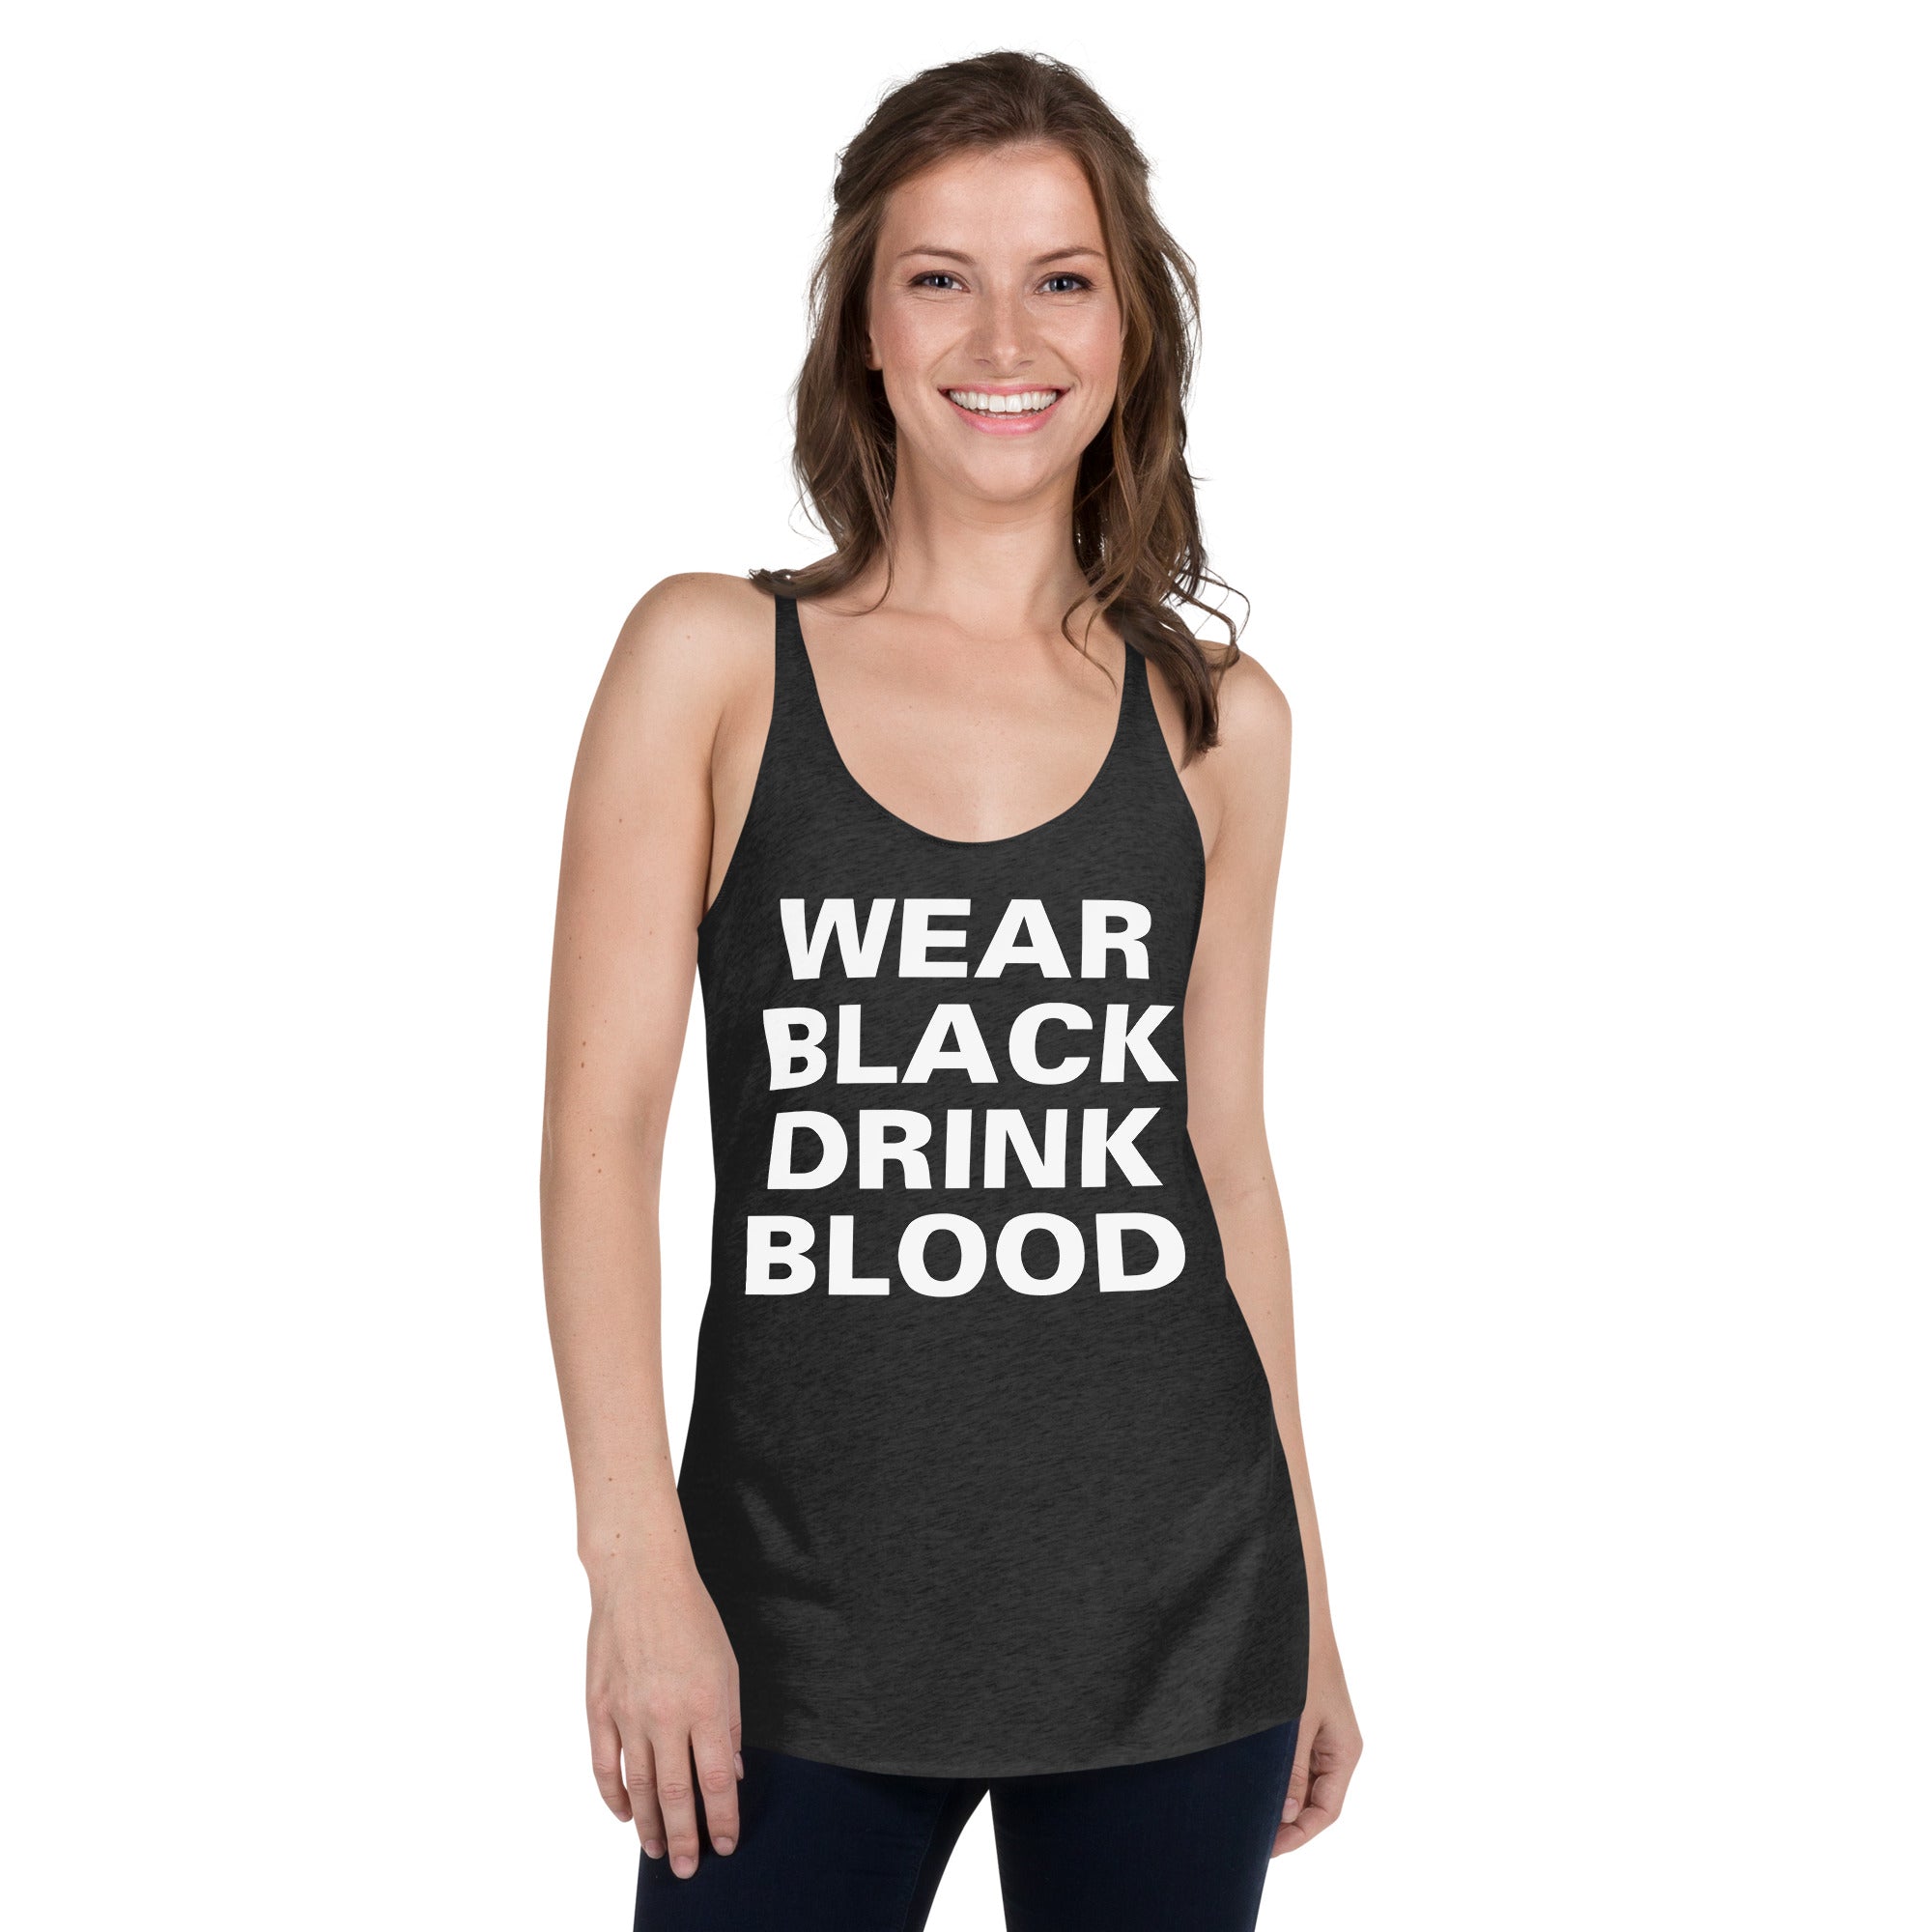 Wear Black Drink Blood Gothic Horror Women's Racerback Tank Top Shirt - Edge of Life Designs